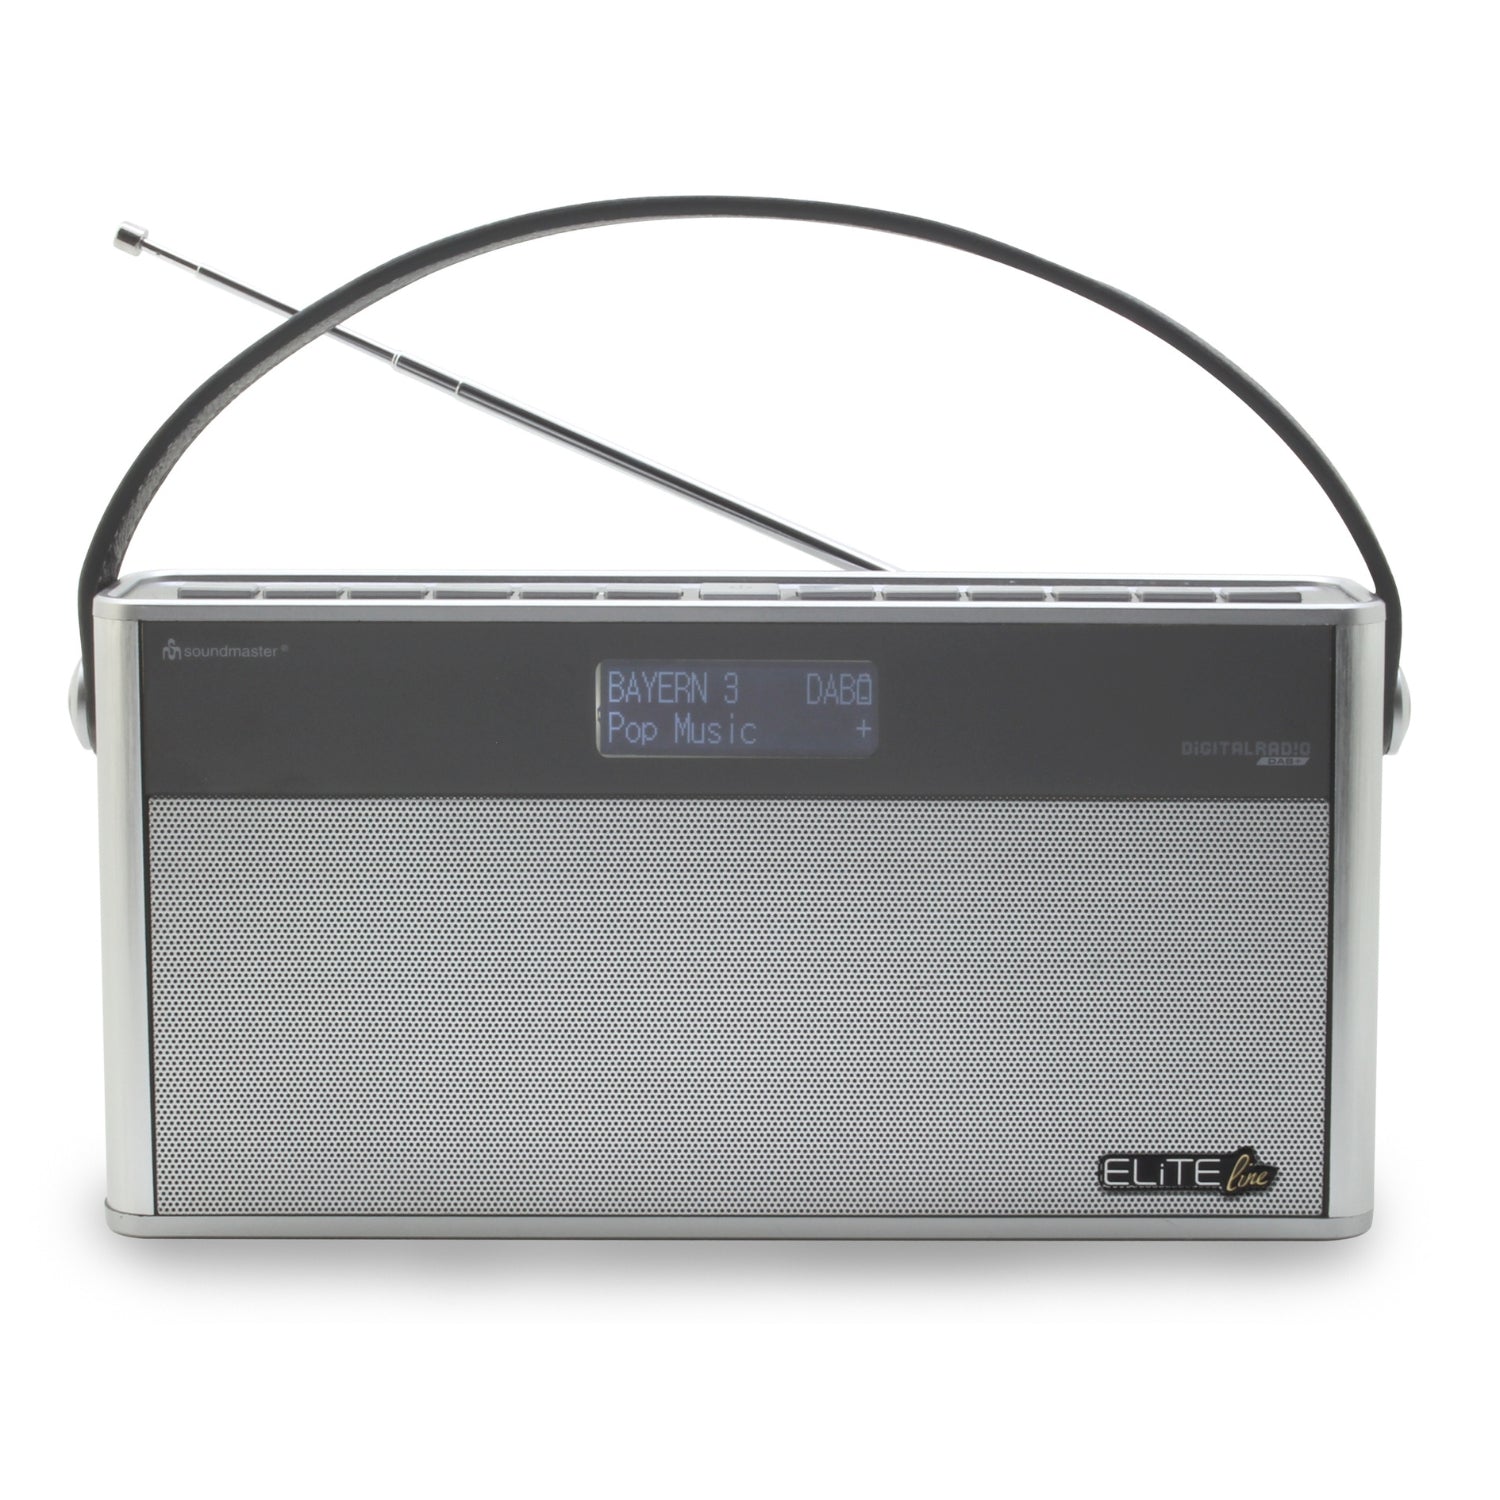 Soundmaster EliteLine DAB750SI portable DAB+ FM digital radio Bluetooth built-in lithium battery